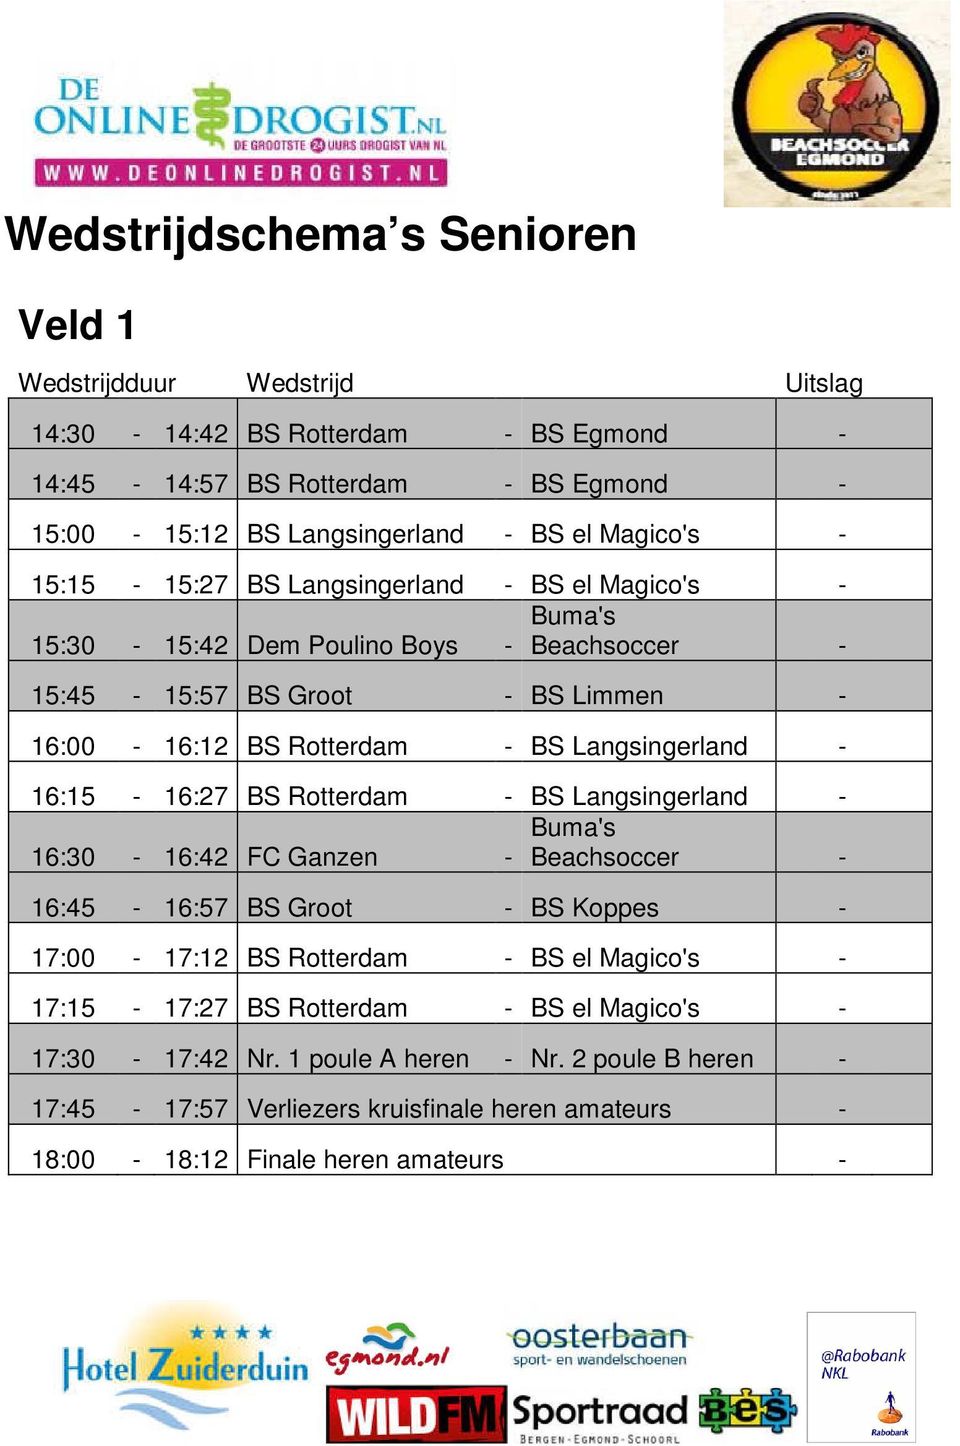 16:15-16:27 BS Rotterdam - BS Langsingerland - Buma's 16:30-16:42 FC Ganzen - Beachsoccer - 16:45-16:57 BS Groot - BS Koppes - 17:00-17:12 BS Rotterdam - BS el Magico's -